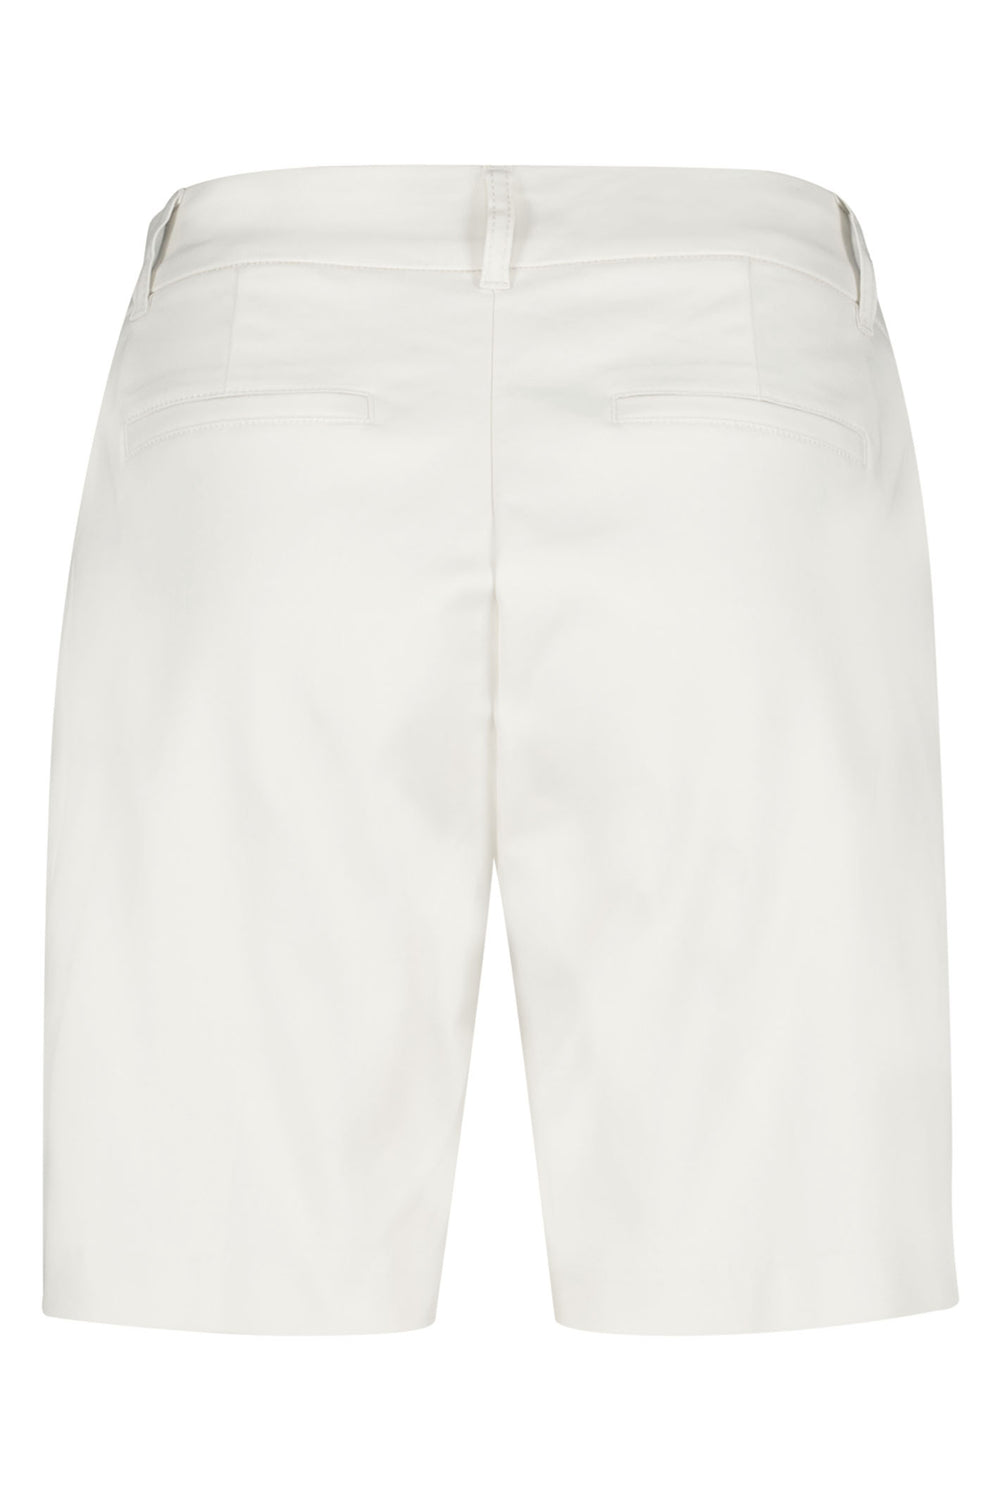 Red Button SRB4176 Ava Off White Smart Shorts 21cm - Olivia Grace Fashion